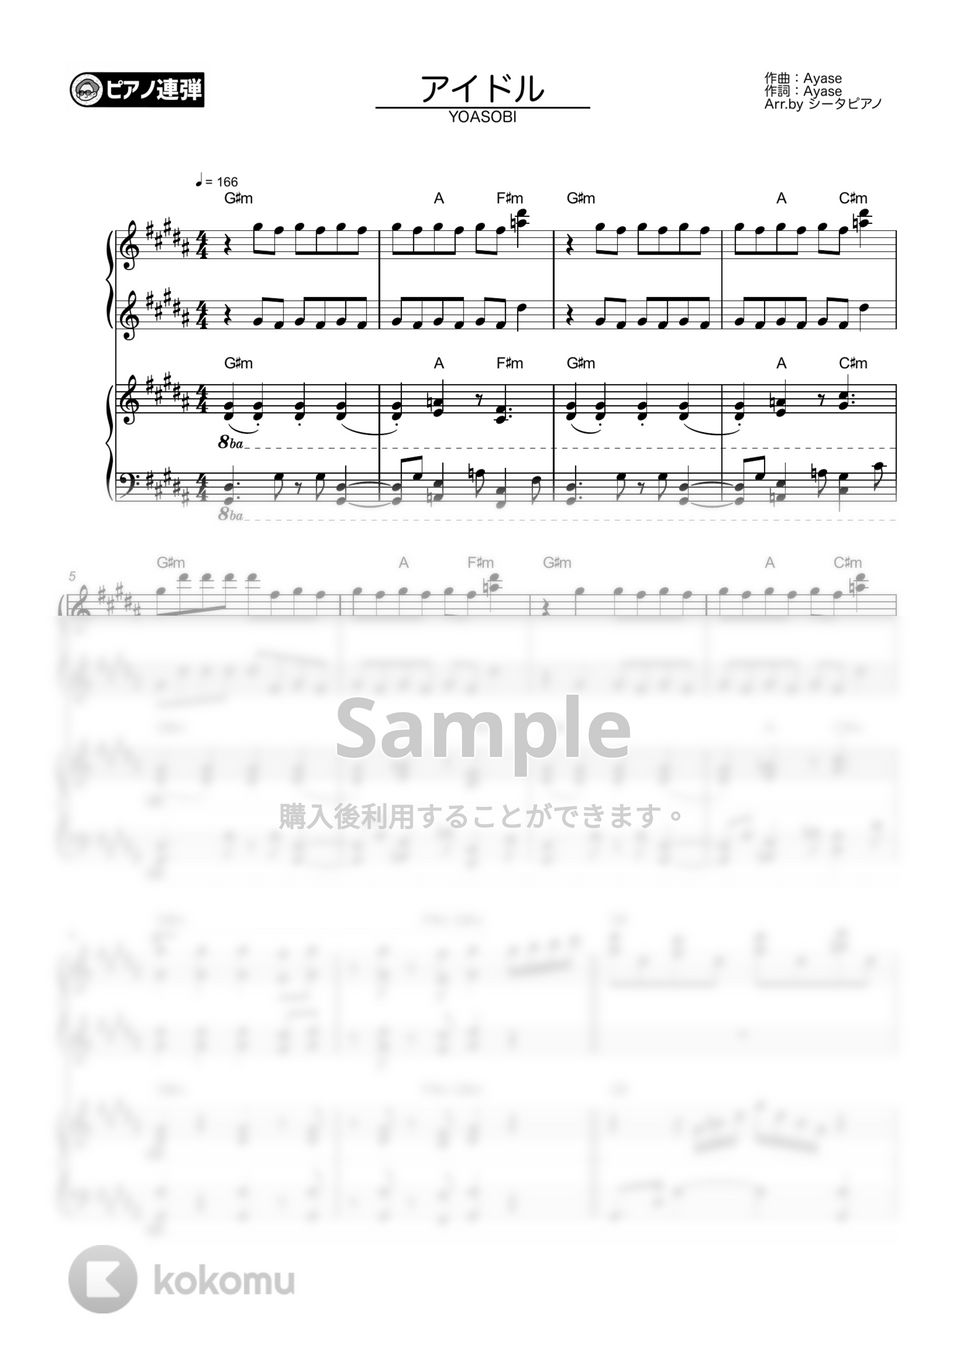 YOASOBI - アイドル(連弾ver.) by シータピアノ